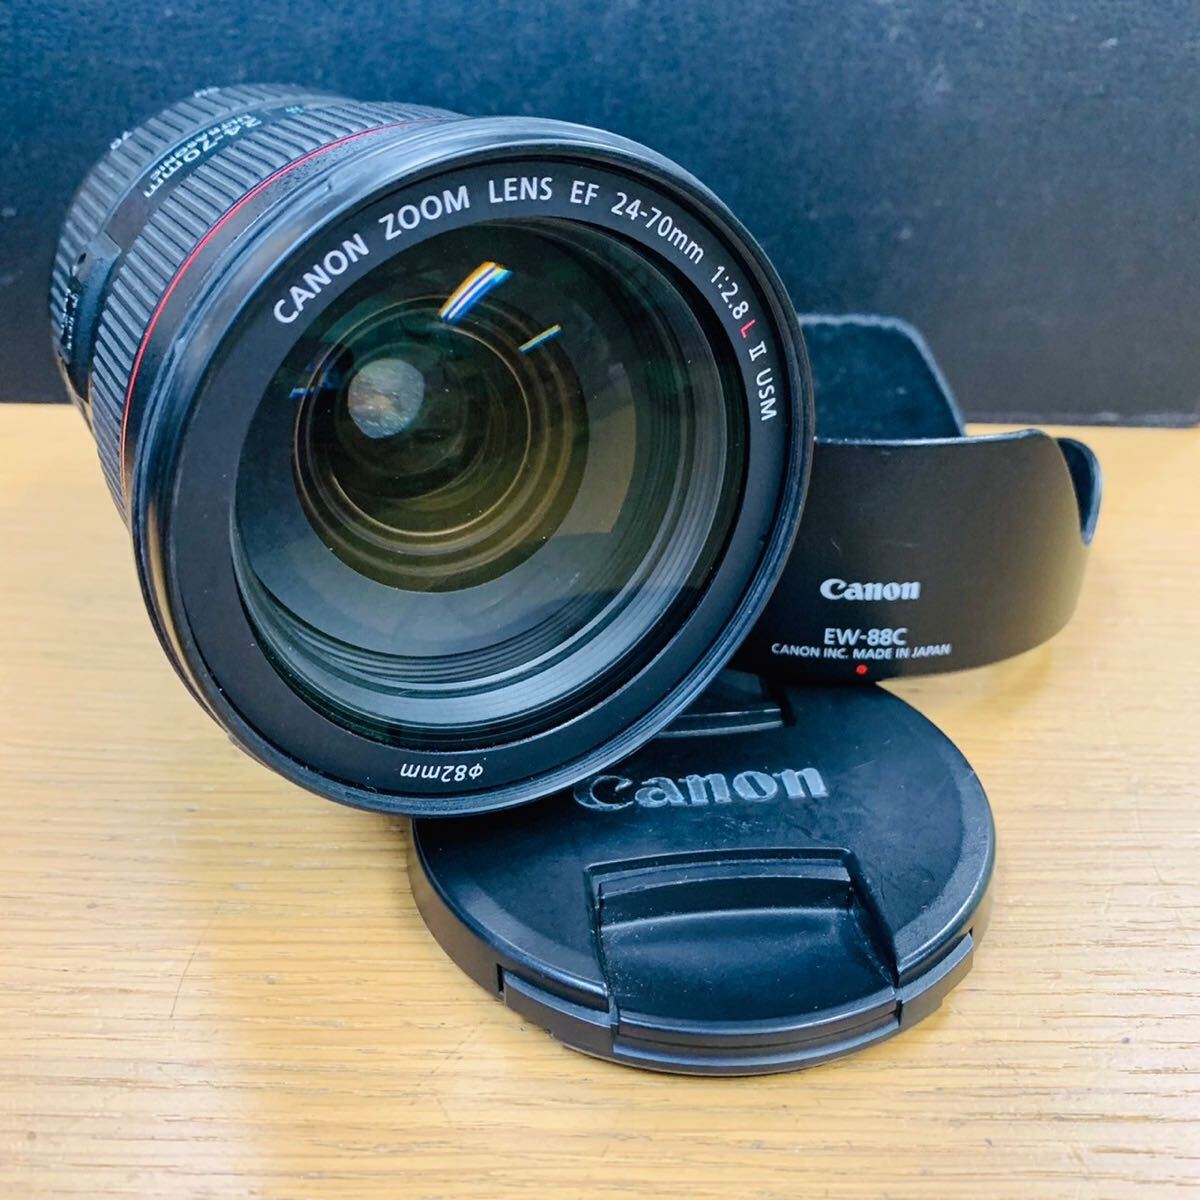 Canon ZOOM LENS EF 24-70mm 1:2.8 L II USM フード付属 NN9990_画像1